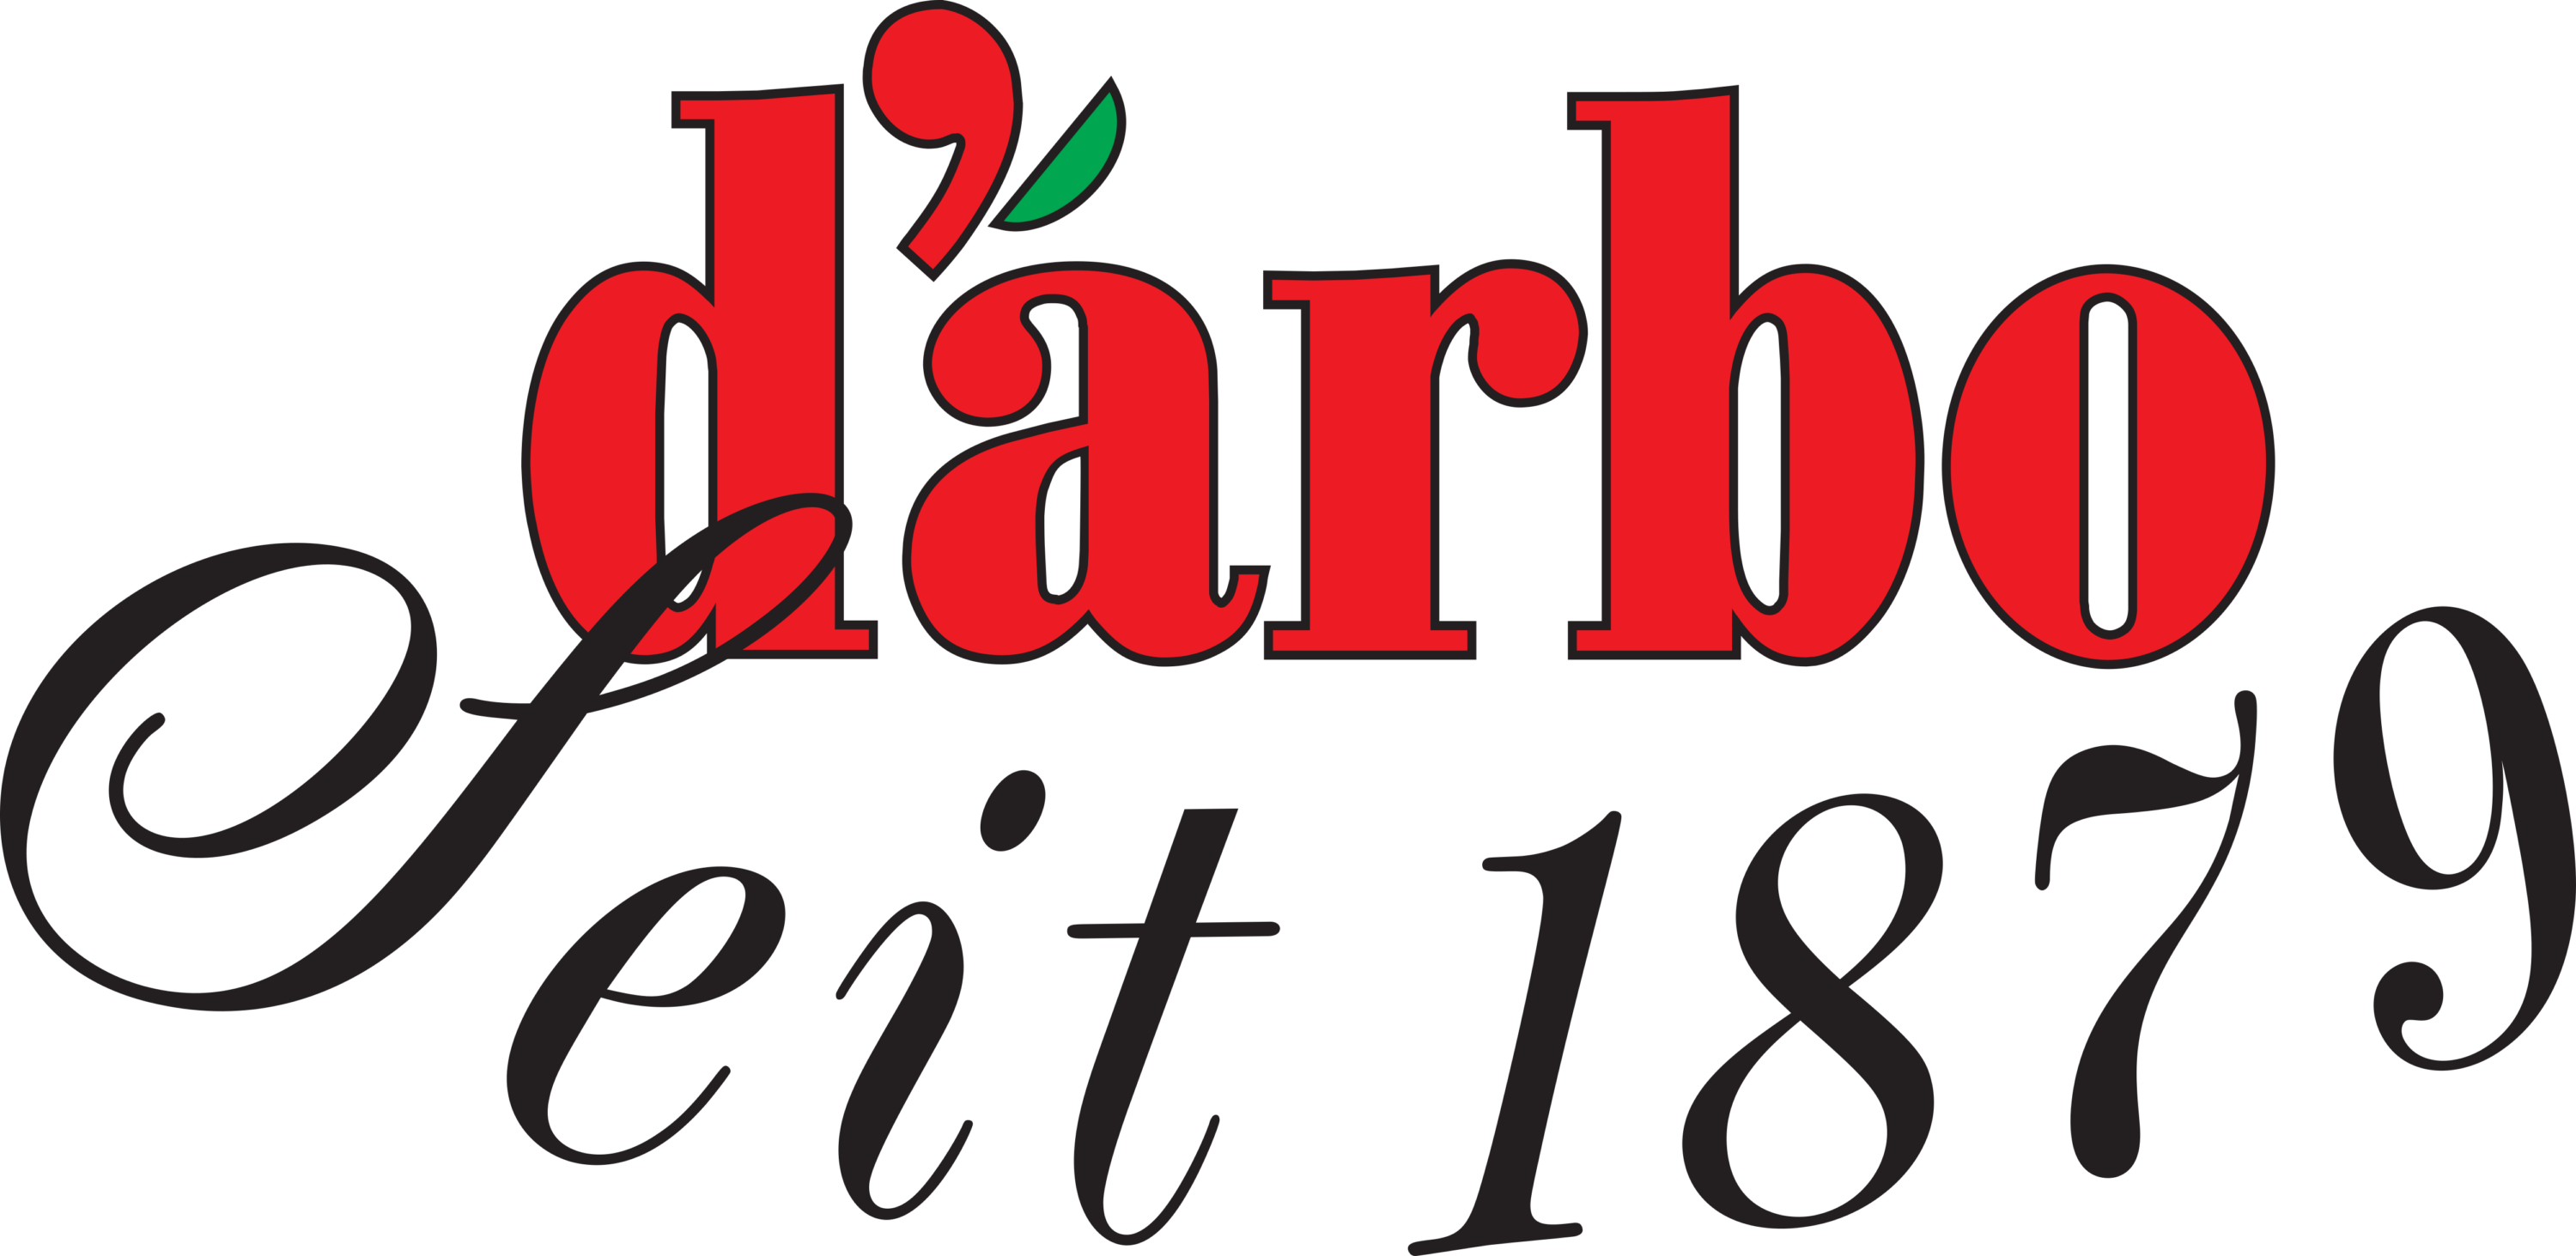 Adolf Darbo AG Logo